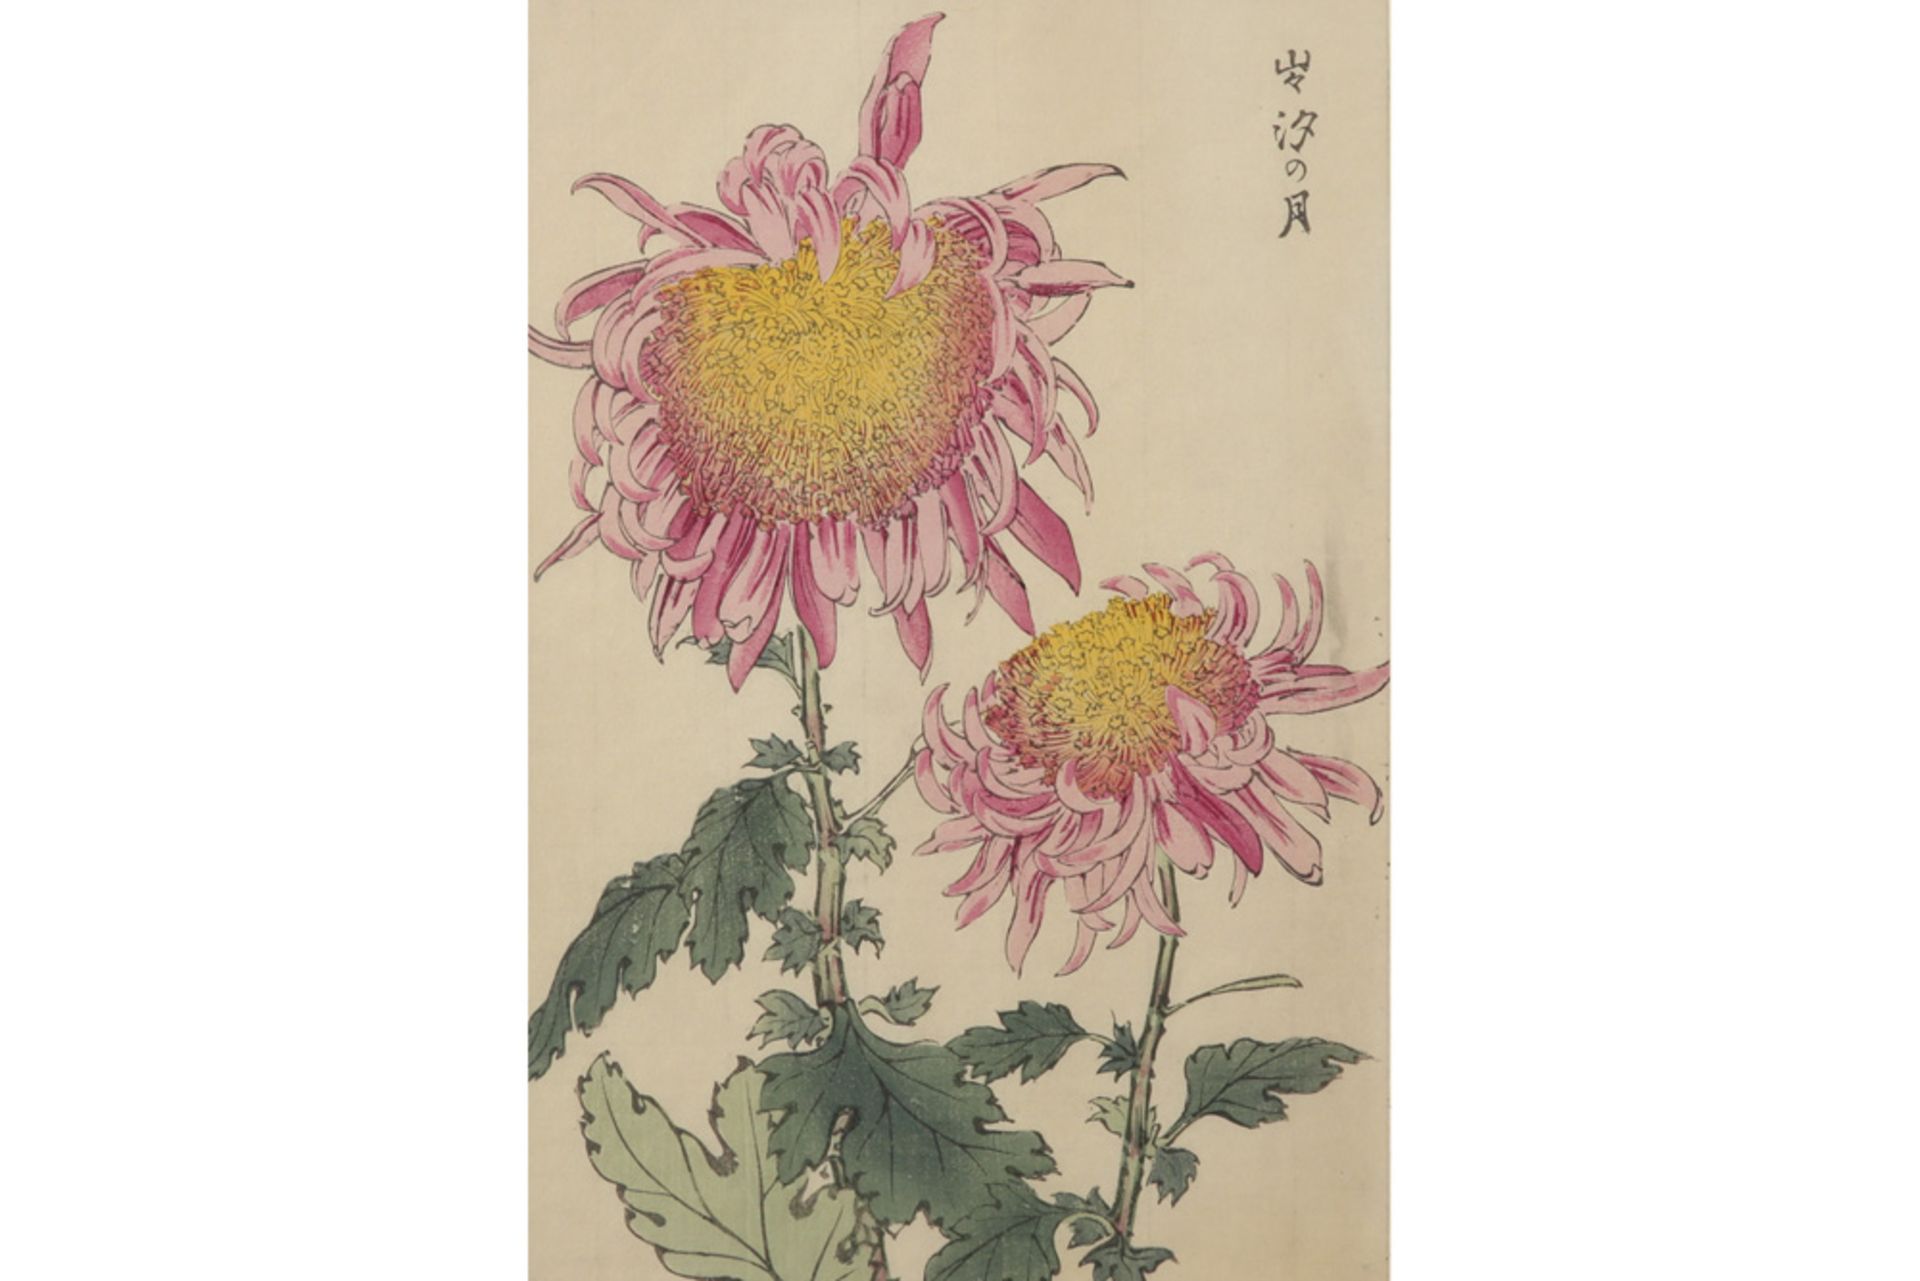 antique Hasegawa Keika woodcut from the "100 Chrysanthemums" series, edited by Noasaburo in 1893 ||